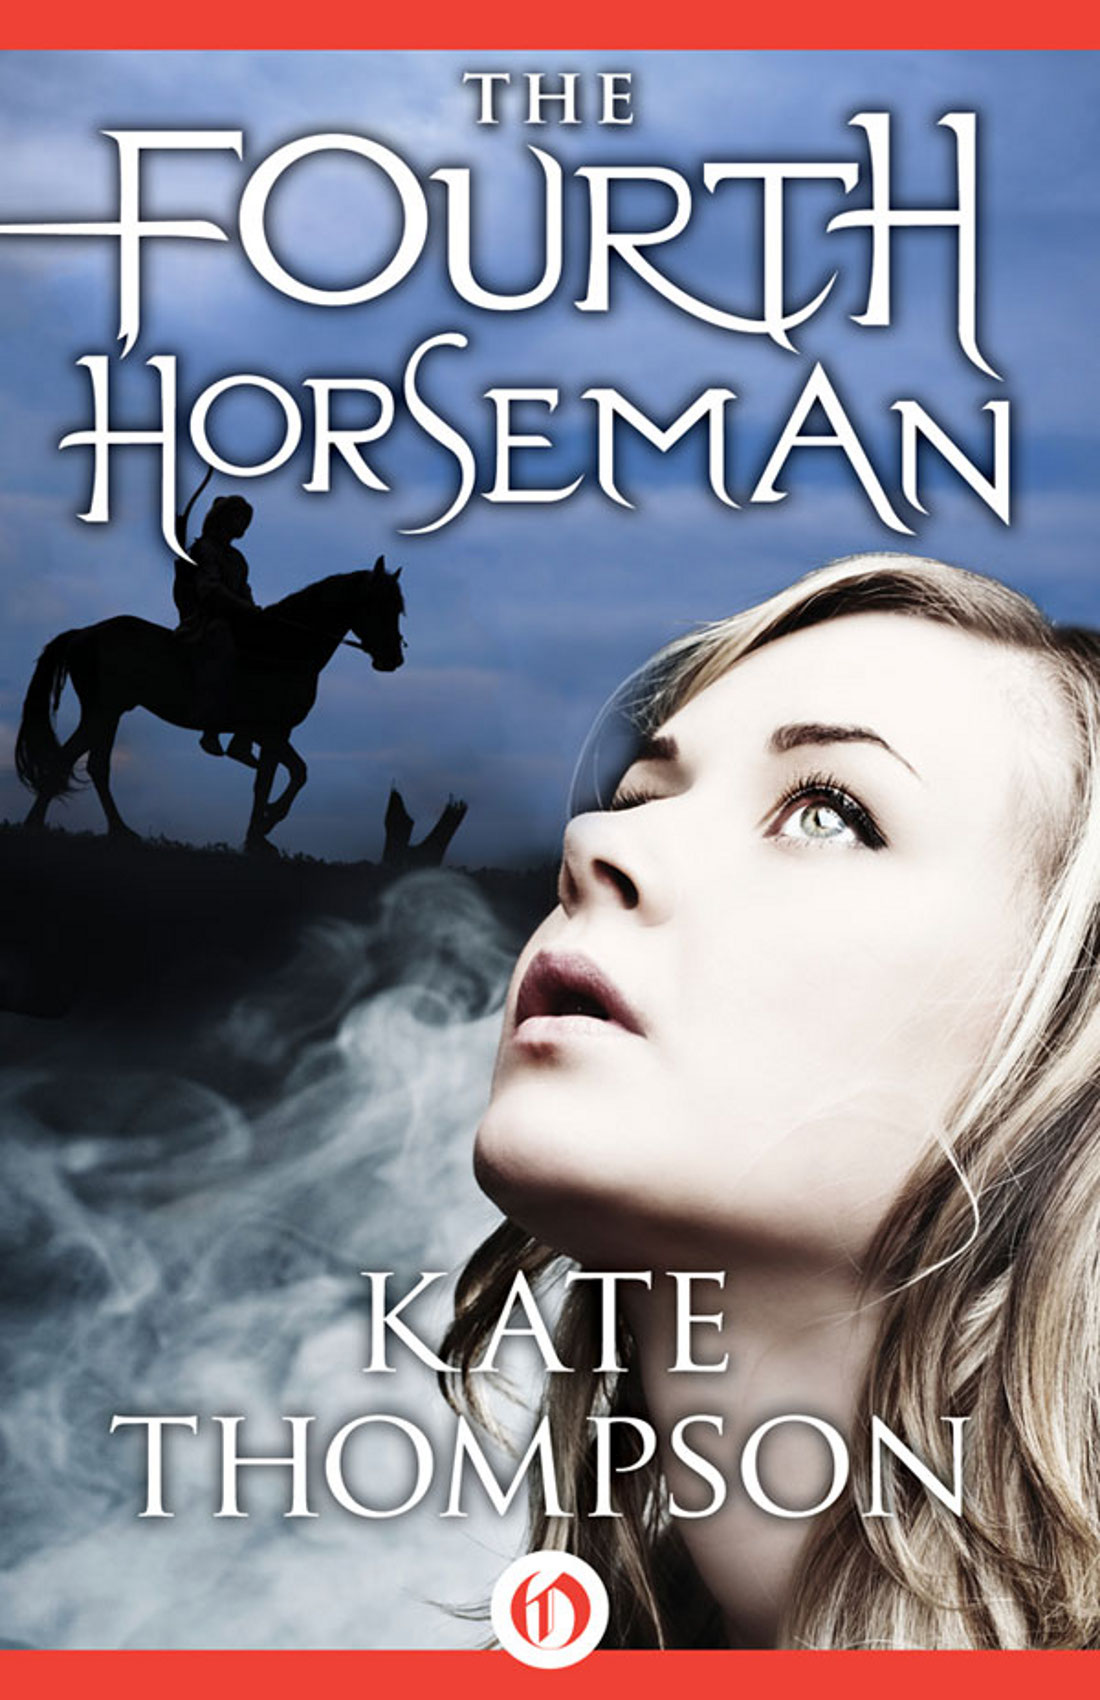 Fourth Horseman by Kate Thompson